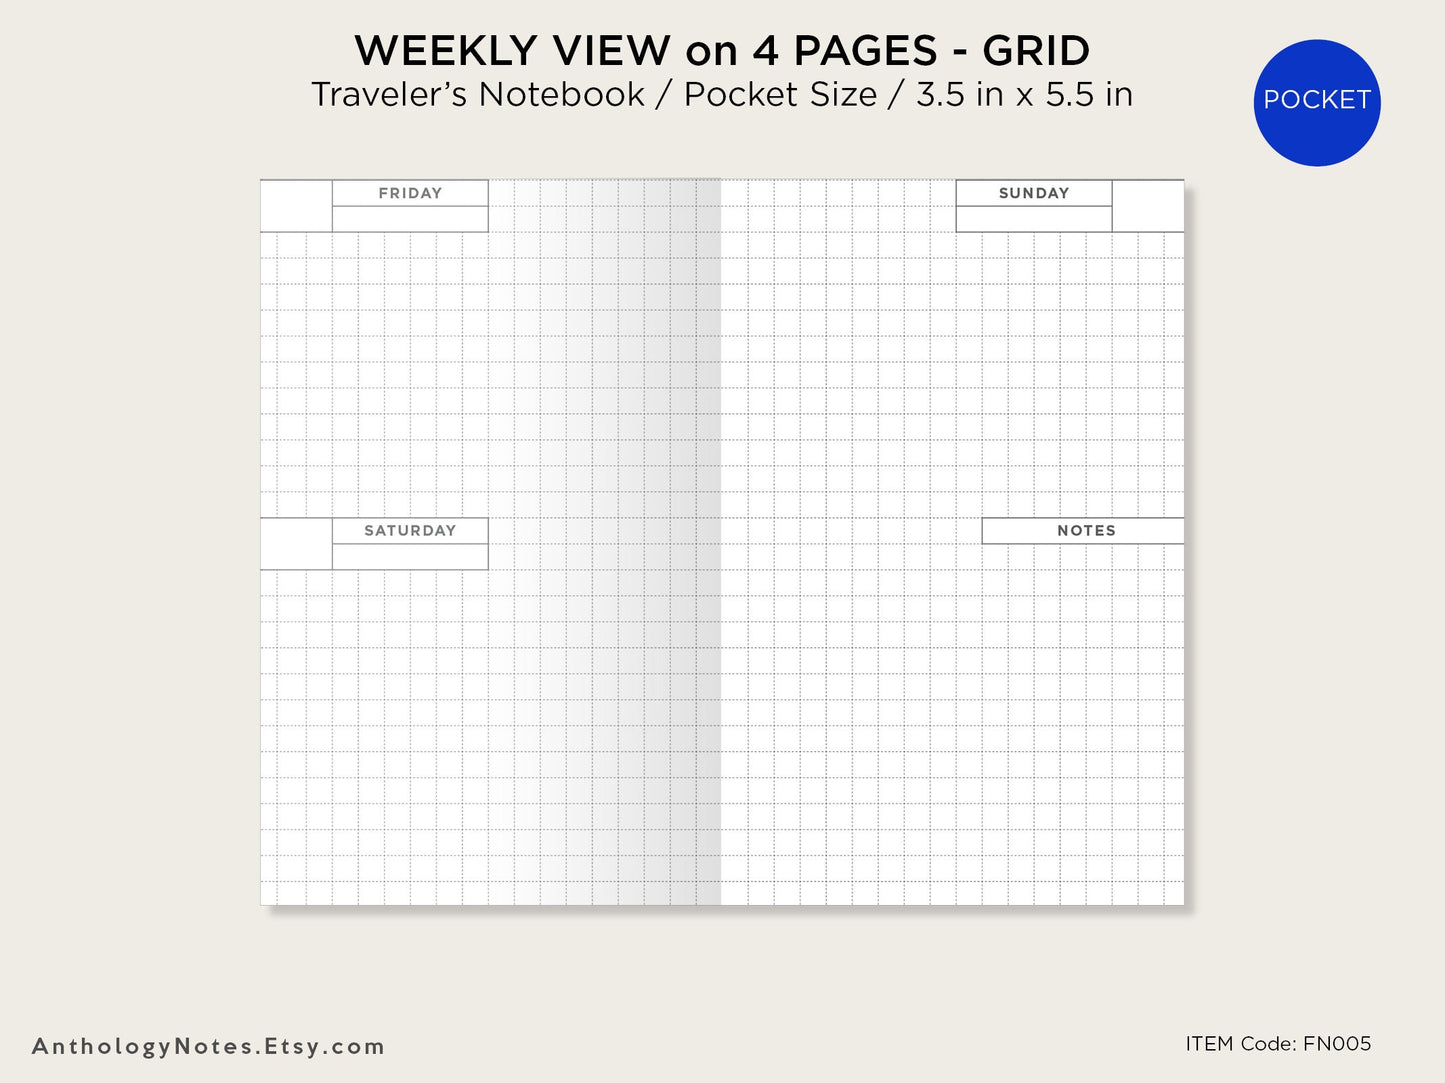 POCKET TN Weekly Planner Printable Insert Wo4P GRID Horizontal Week on 4 Pages Undated, Minimalist, Functional